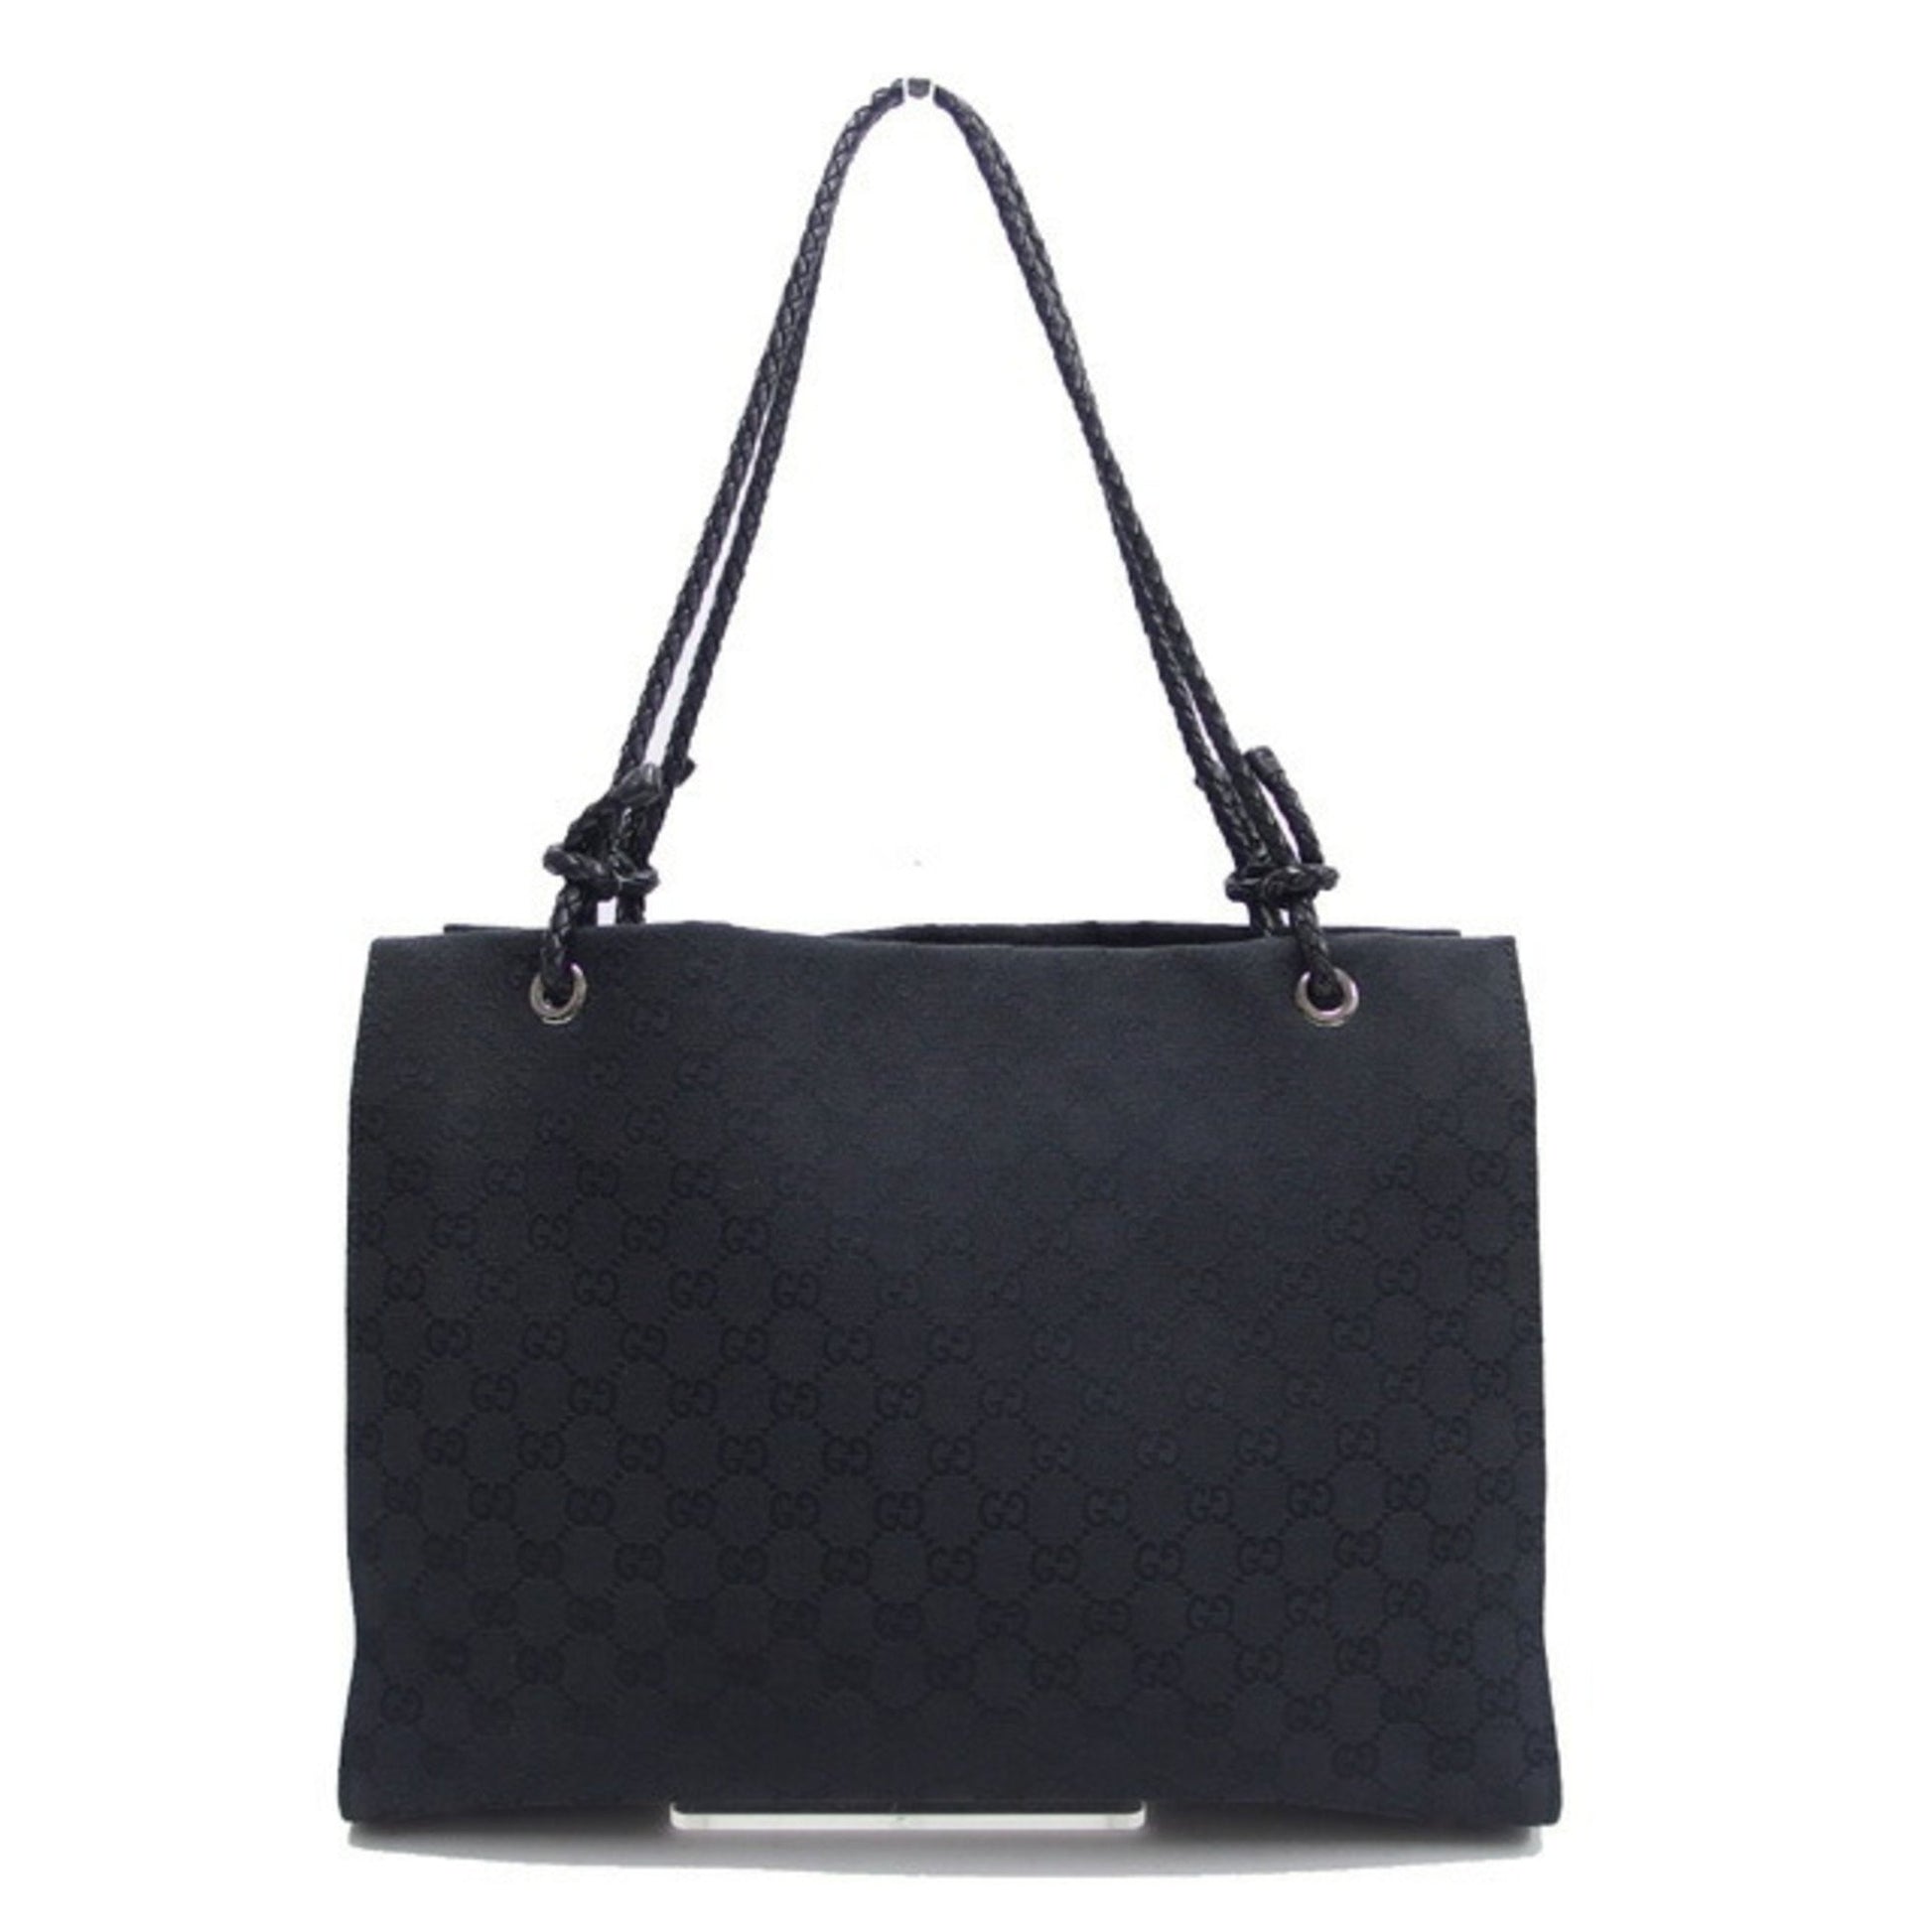 Gucci - Gifford Large Braided Handle GG Nylon Shopping Bag Black